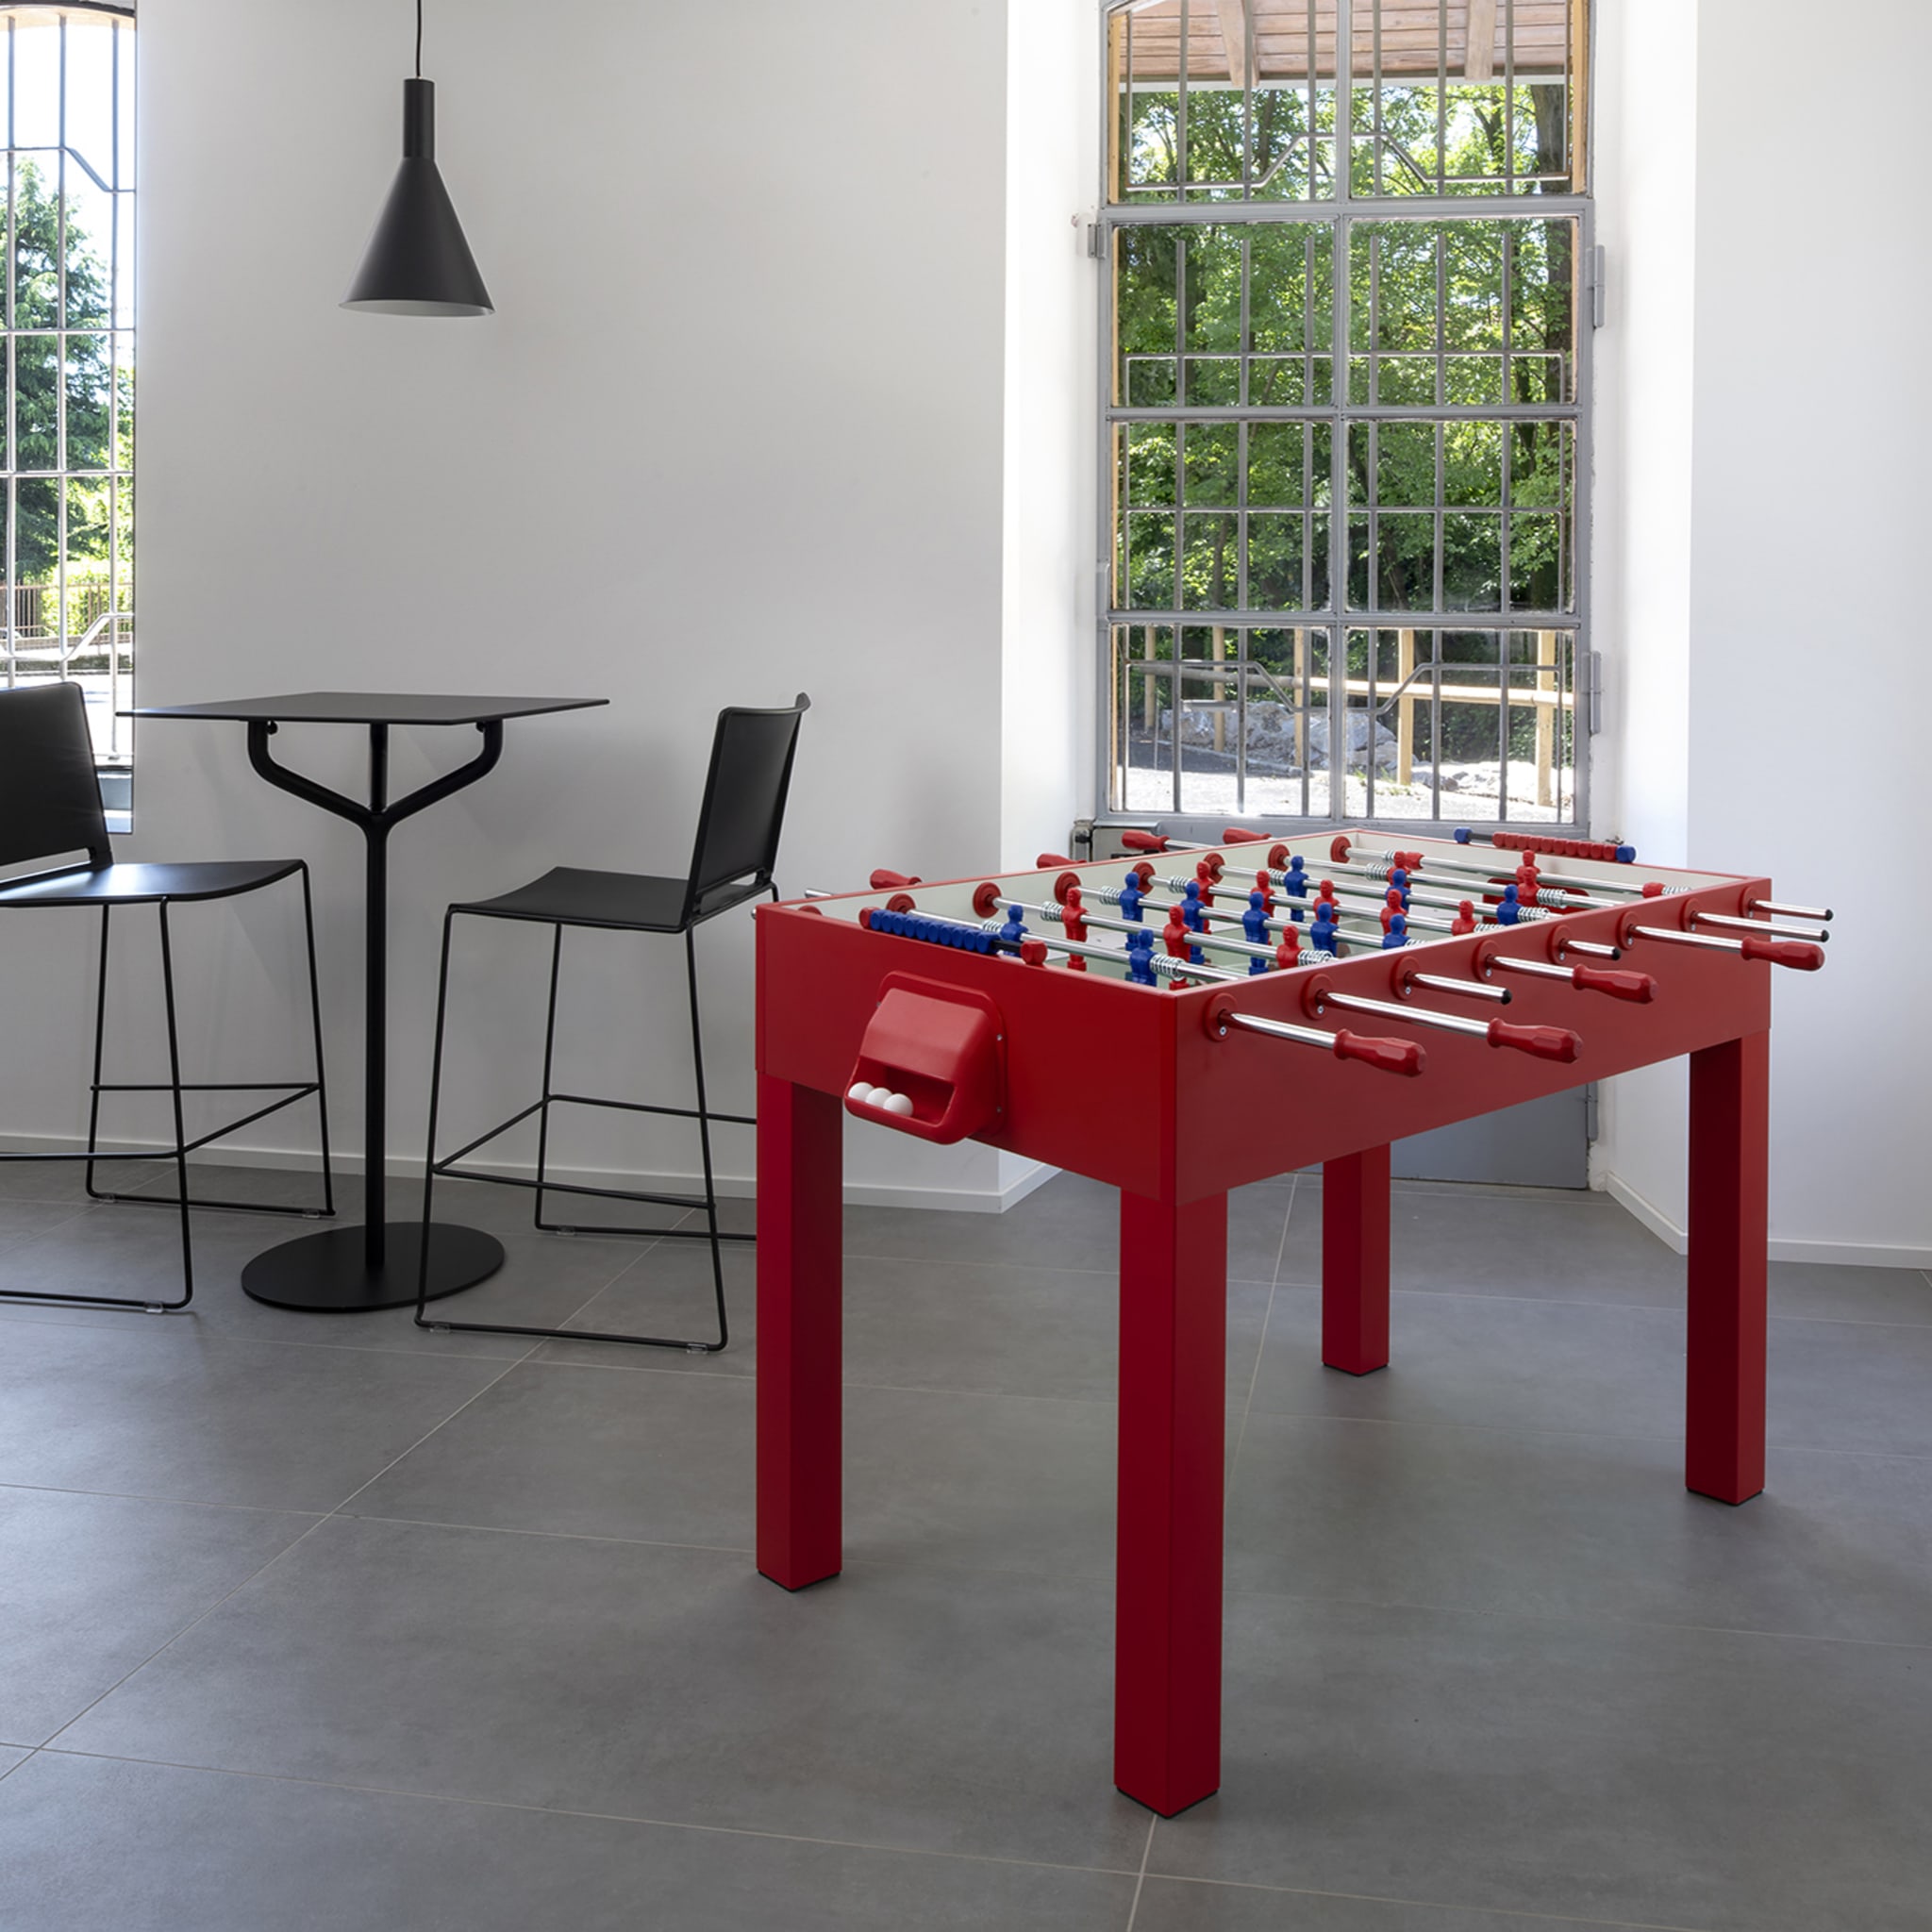 Fido Red Foosball Table by Basaglia + Rota Nodari - Alternative view 5